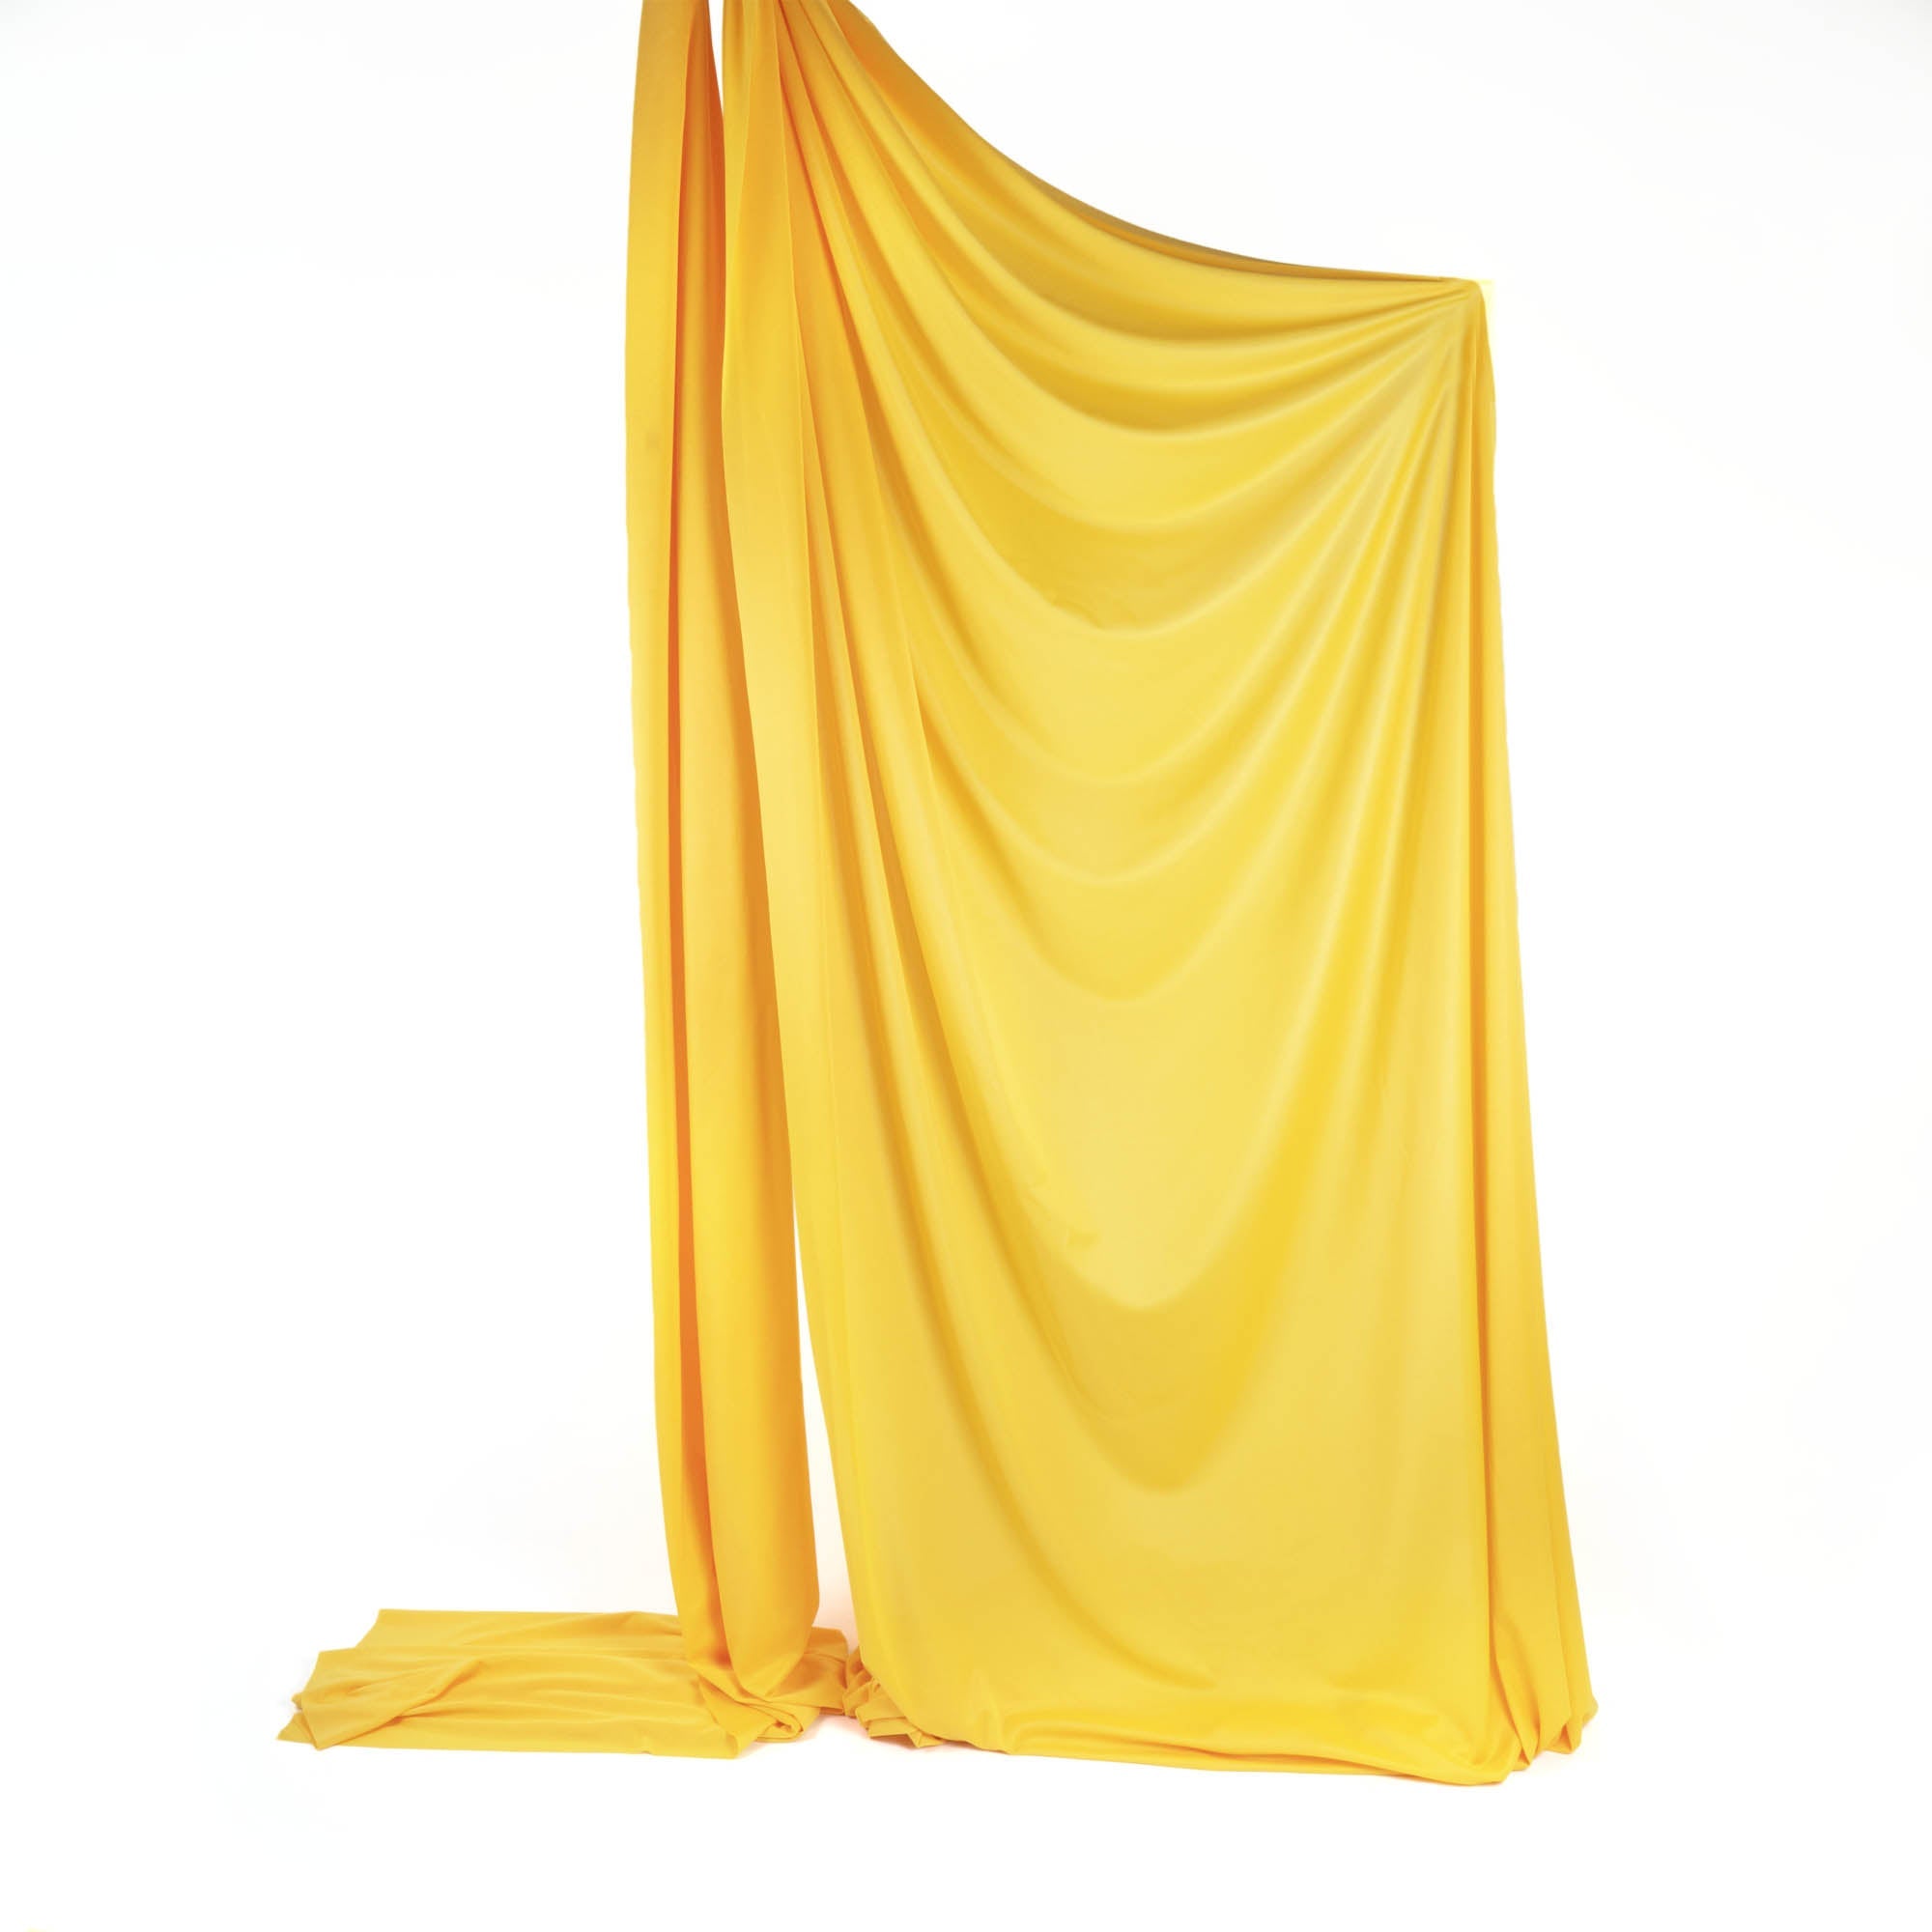 Golden yellow silk rigged